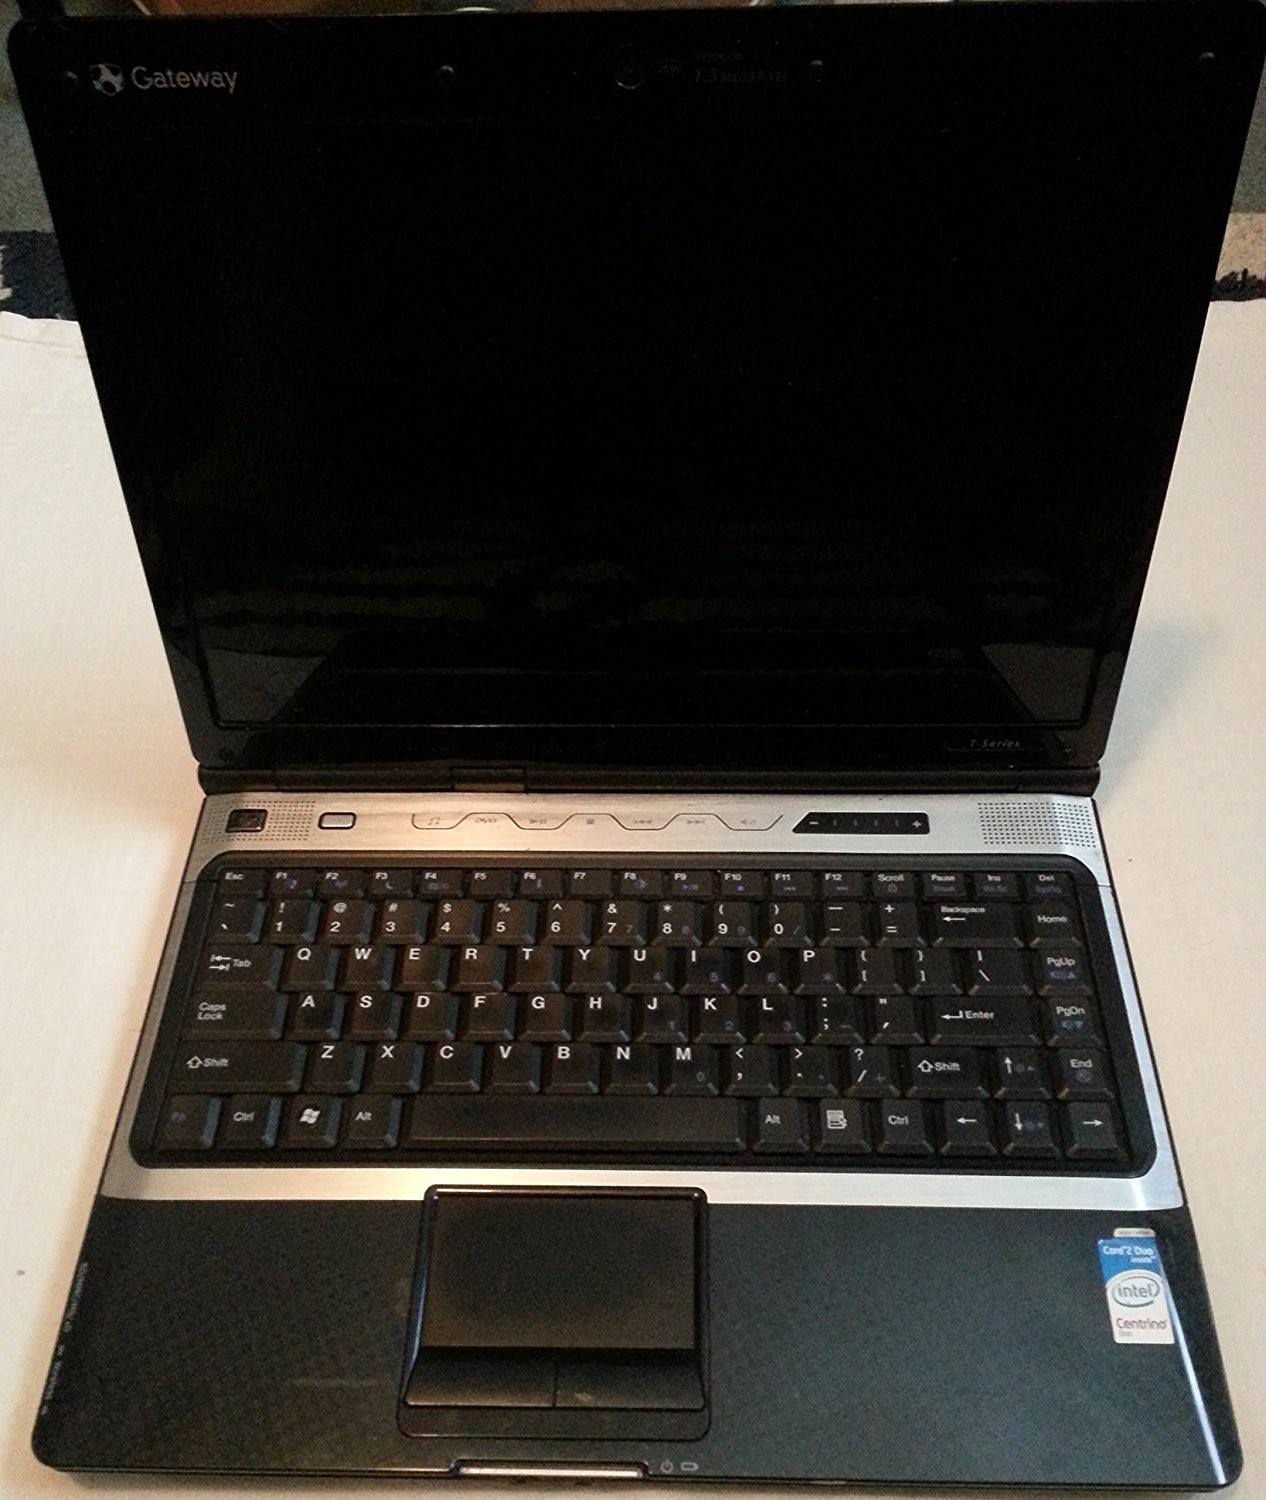 T-SeriesW350i-Gateway T-Series W350i Refurbished Laptop Core 2 Duo 4GB RAM 160GB HDD Windows 7 #-image